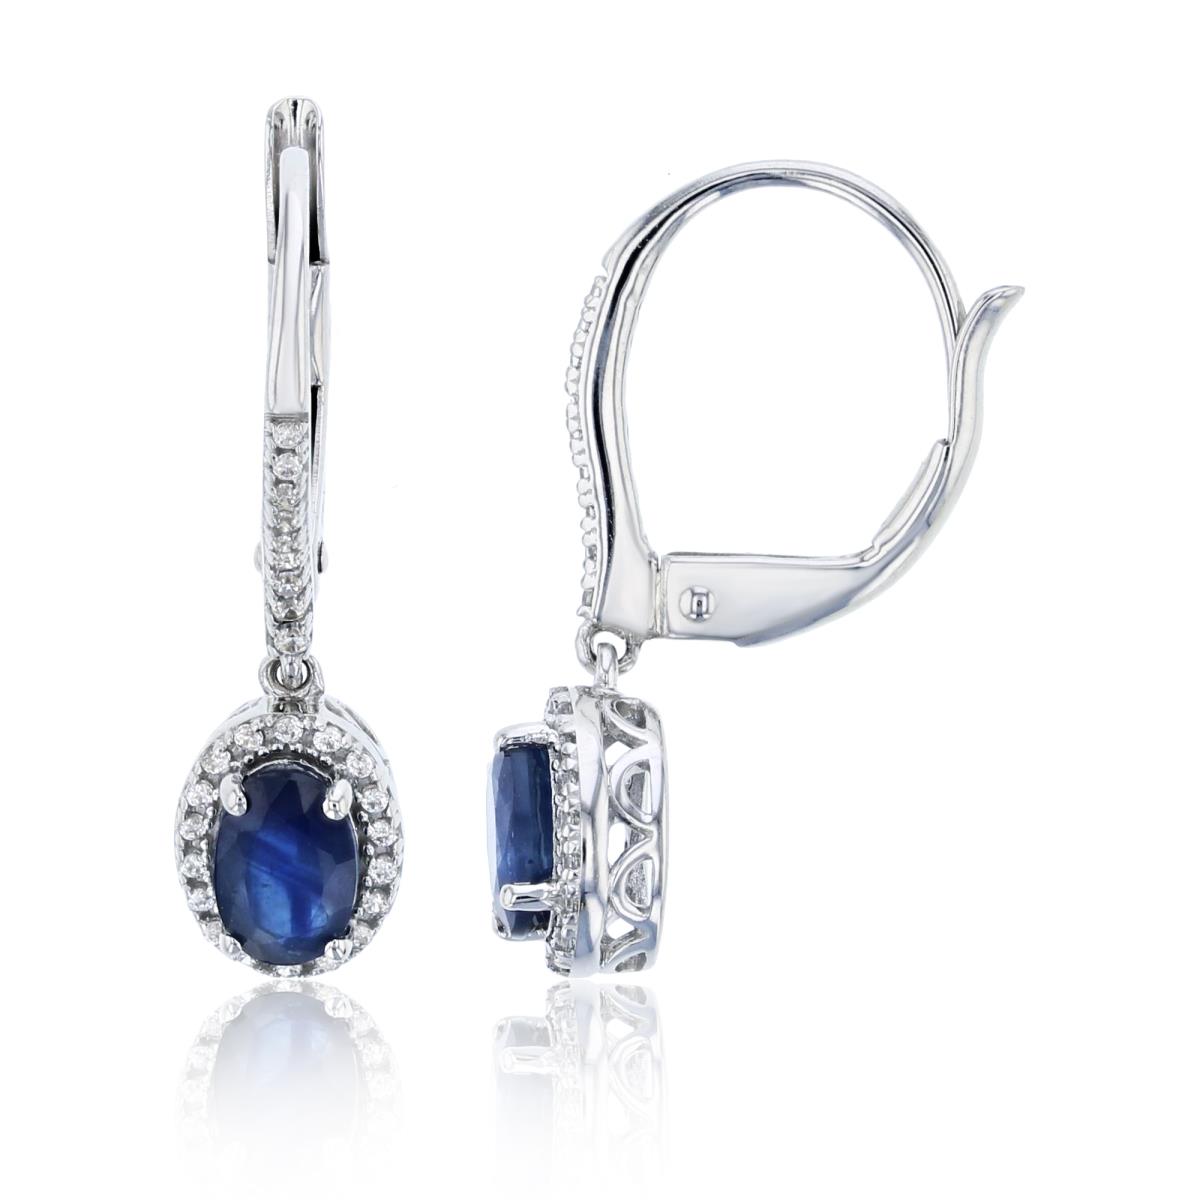 14K White Gold 0.165cttw Rnd Diamonds & 6x4mm Oval Halo Sapphire Dangling Lever Back Earrings